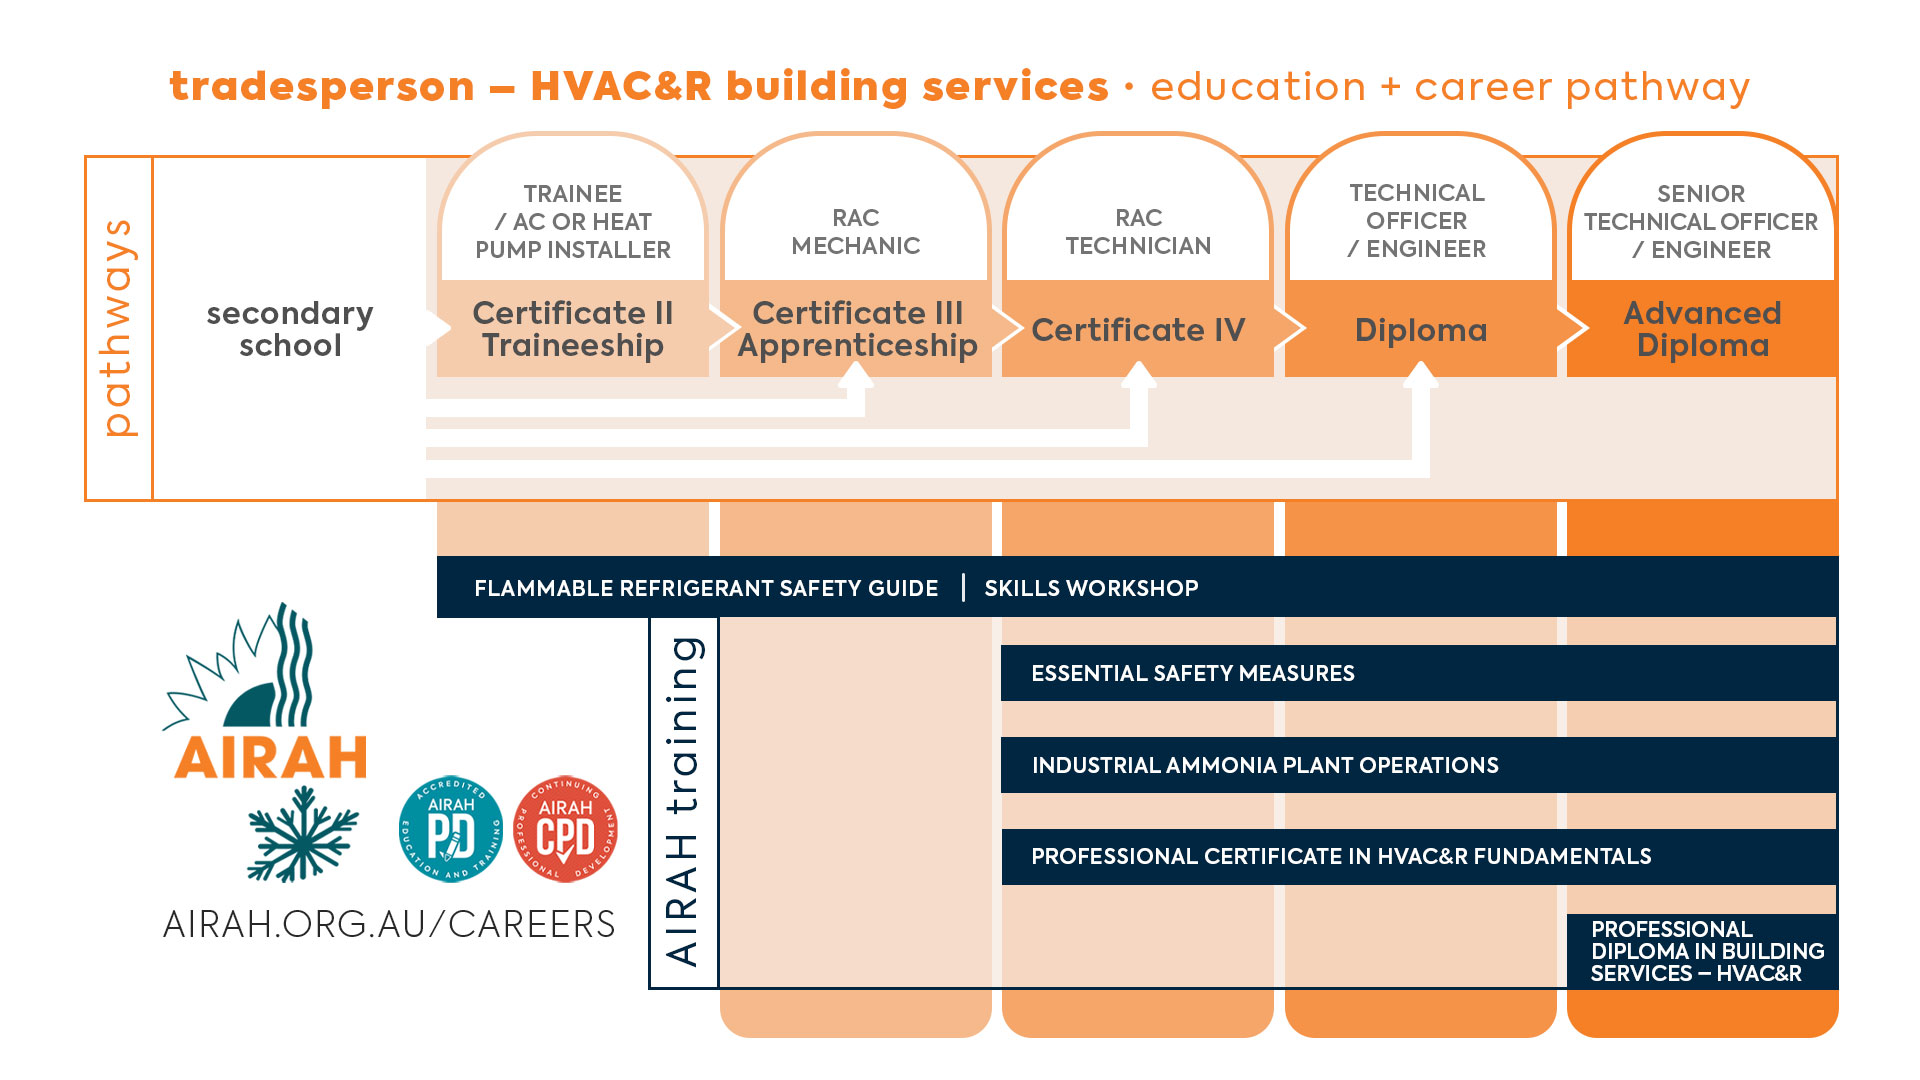 AIRAH HVAC&R tradesperson career pathways